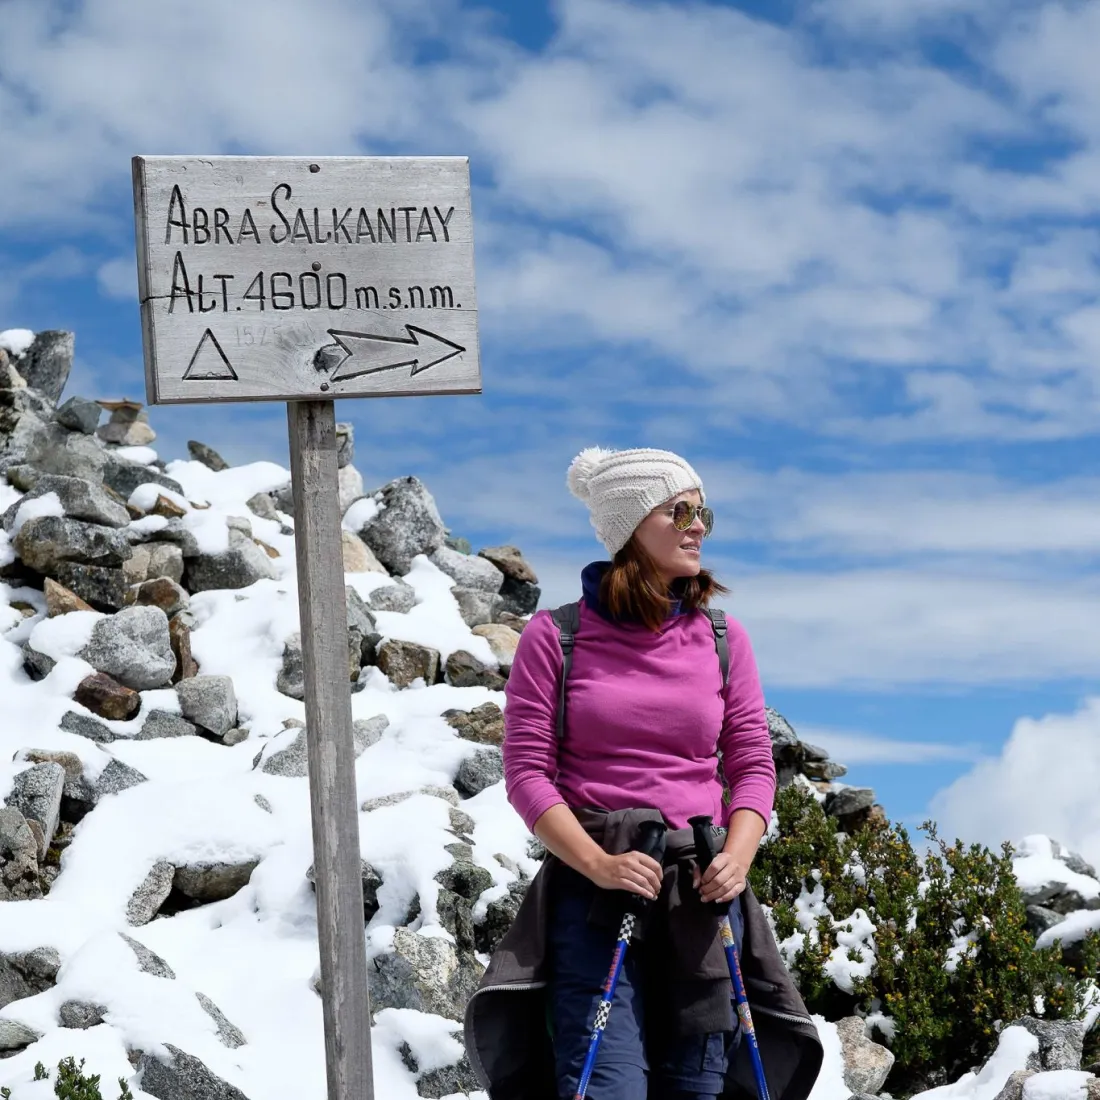 Salkantay Trek: The Road Less Travelled to Machu Picchu